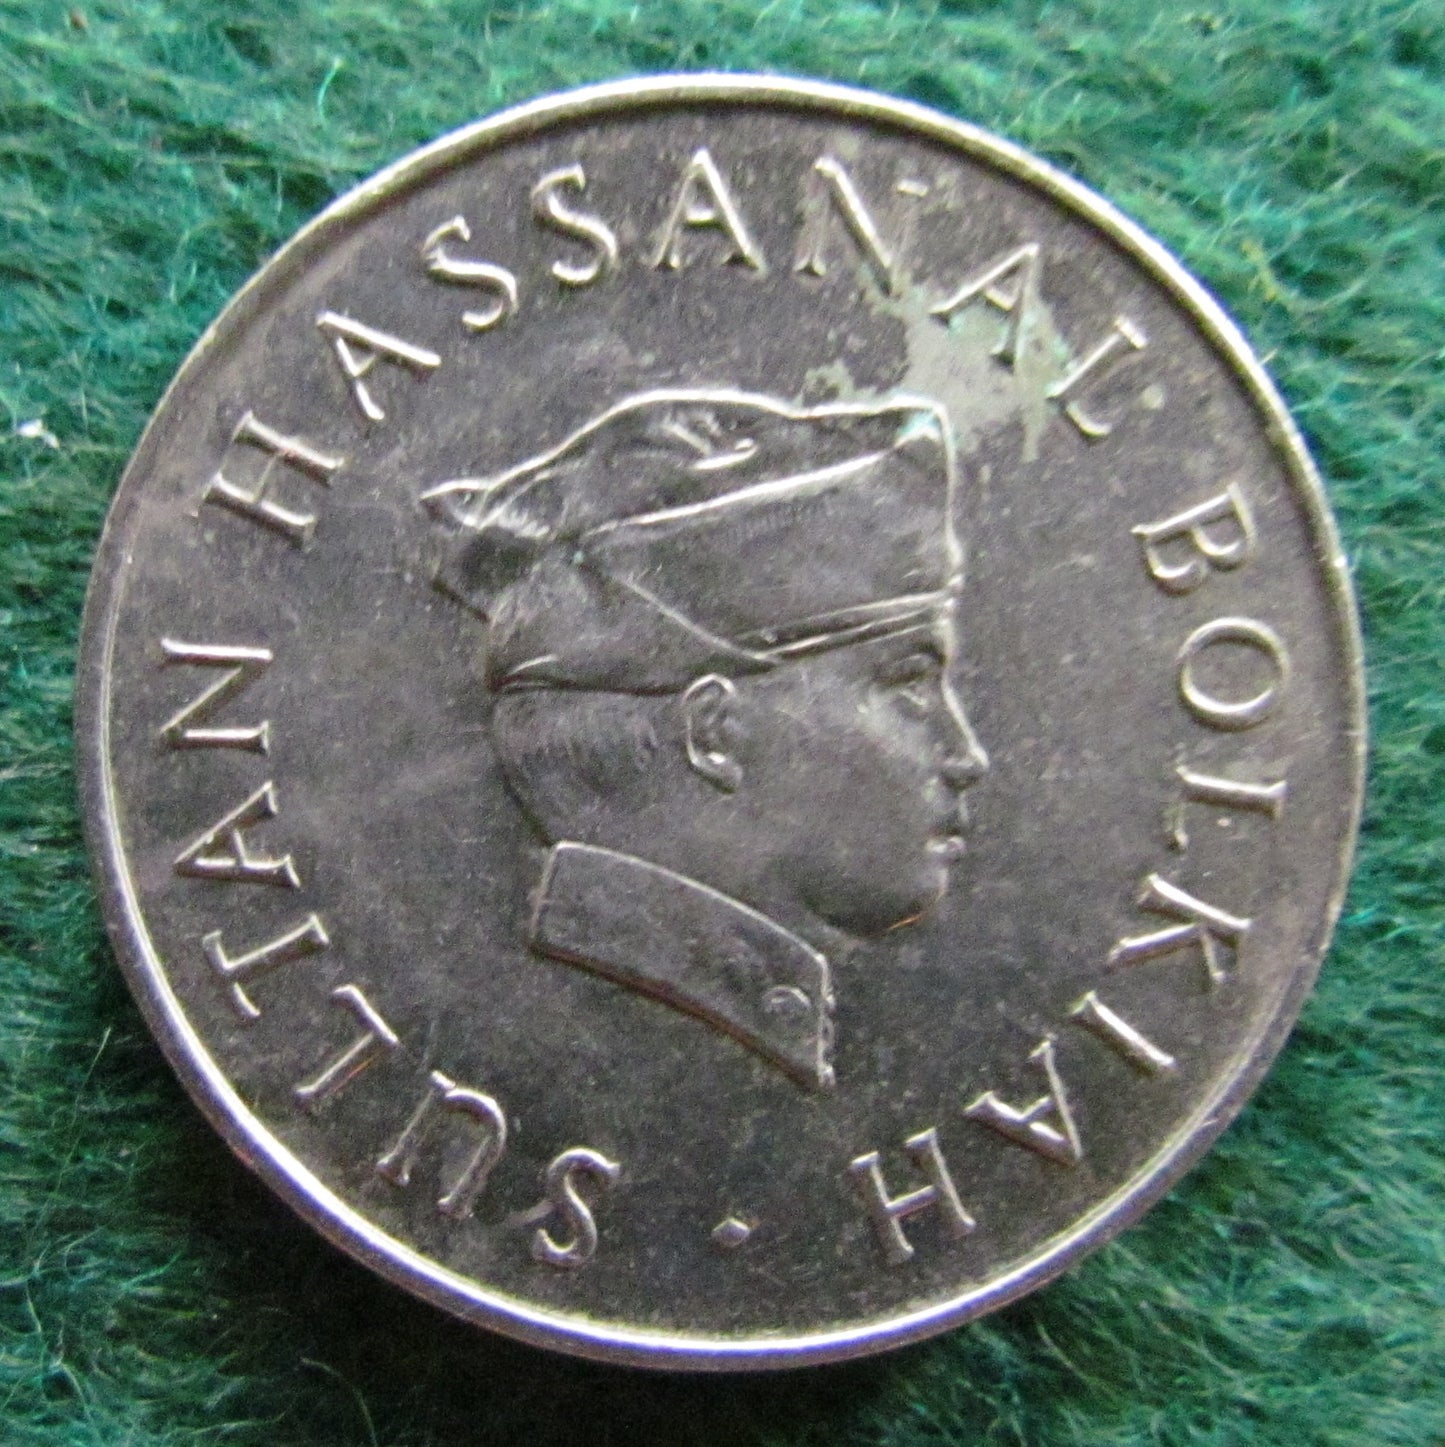 Brunei 1980 20 Sen Coin  Sultan Hassanal Bolkiah - Circulated